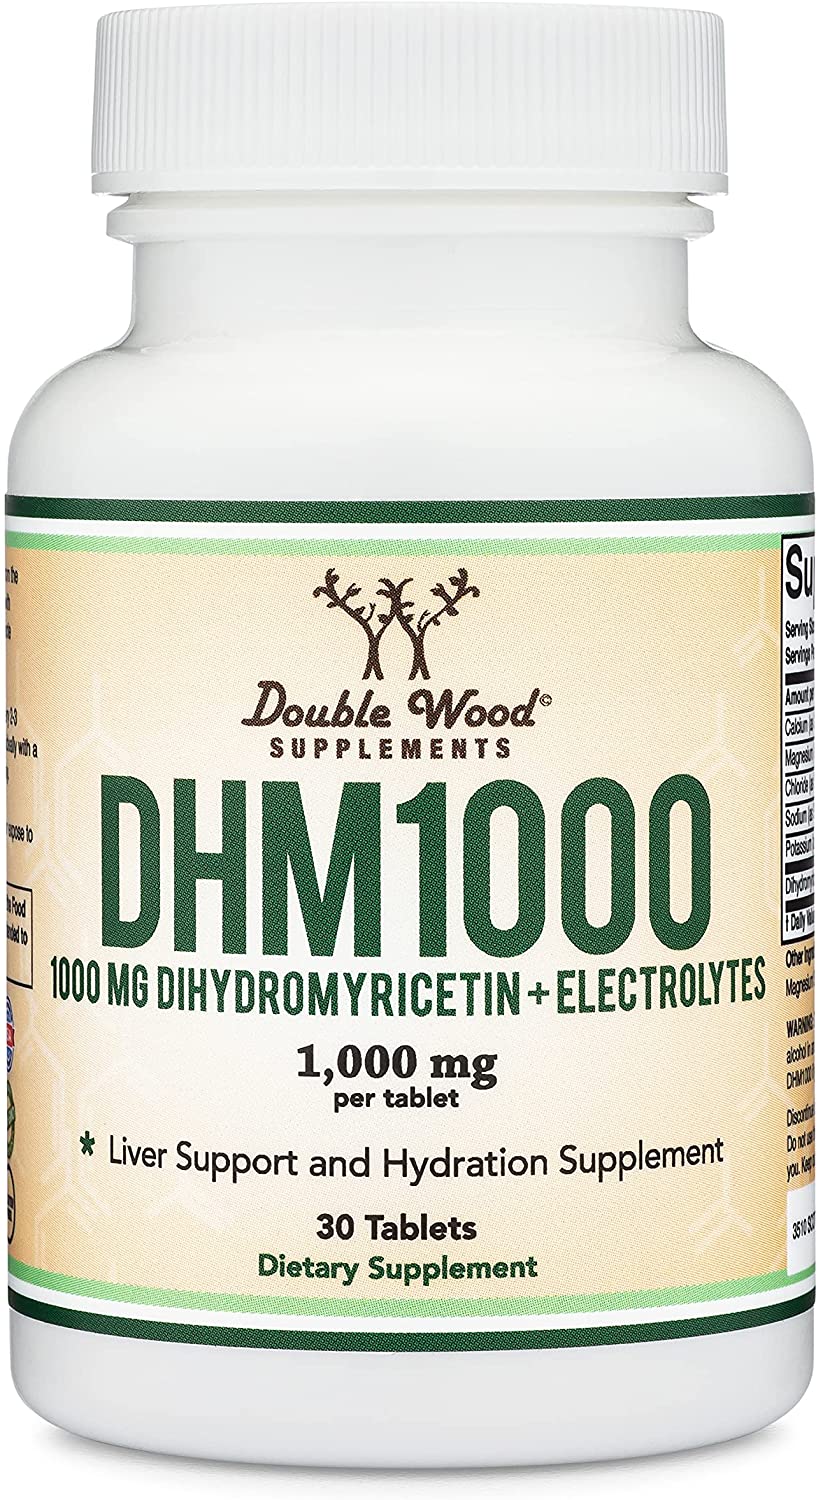 DHM1000